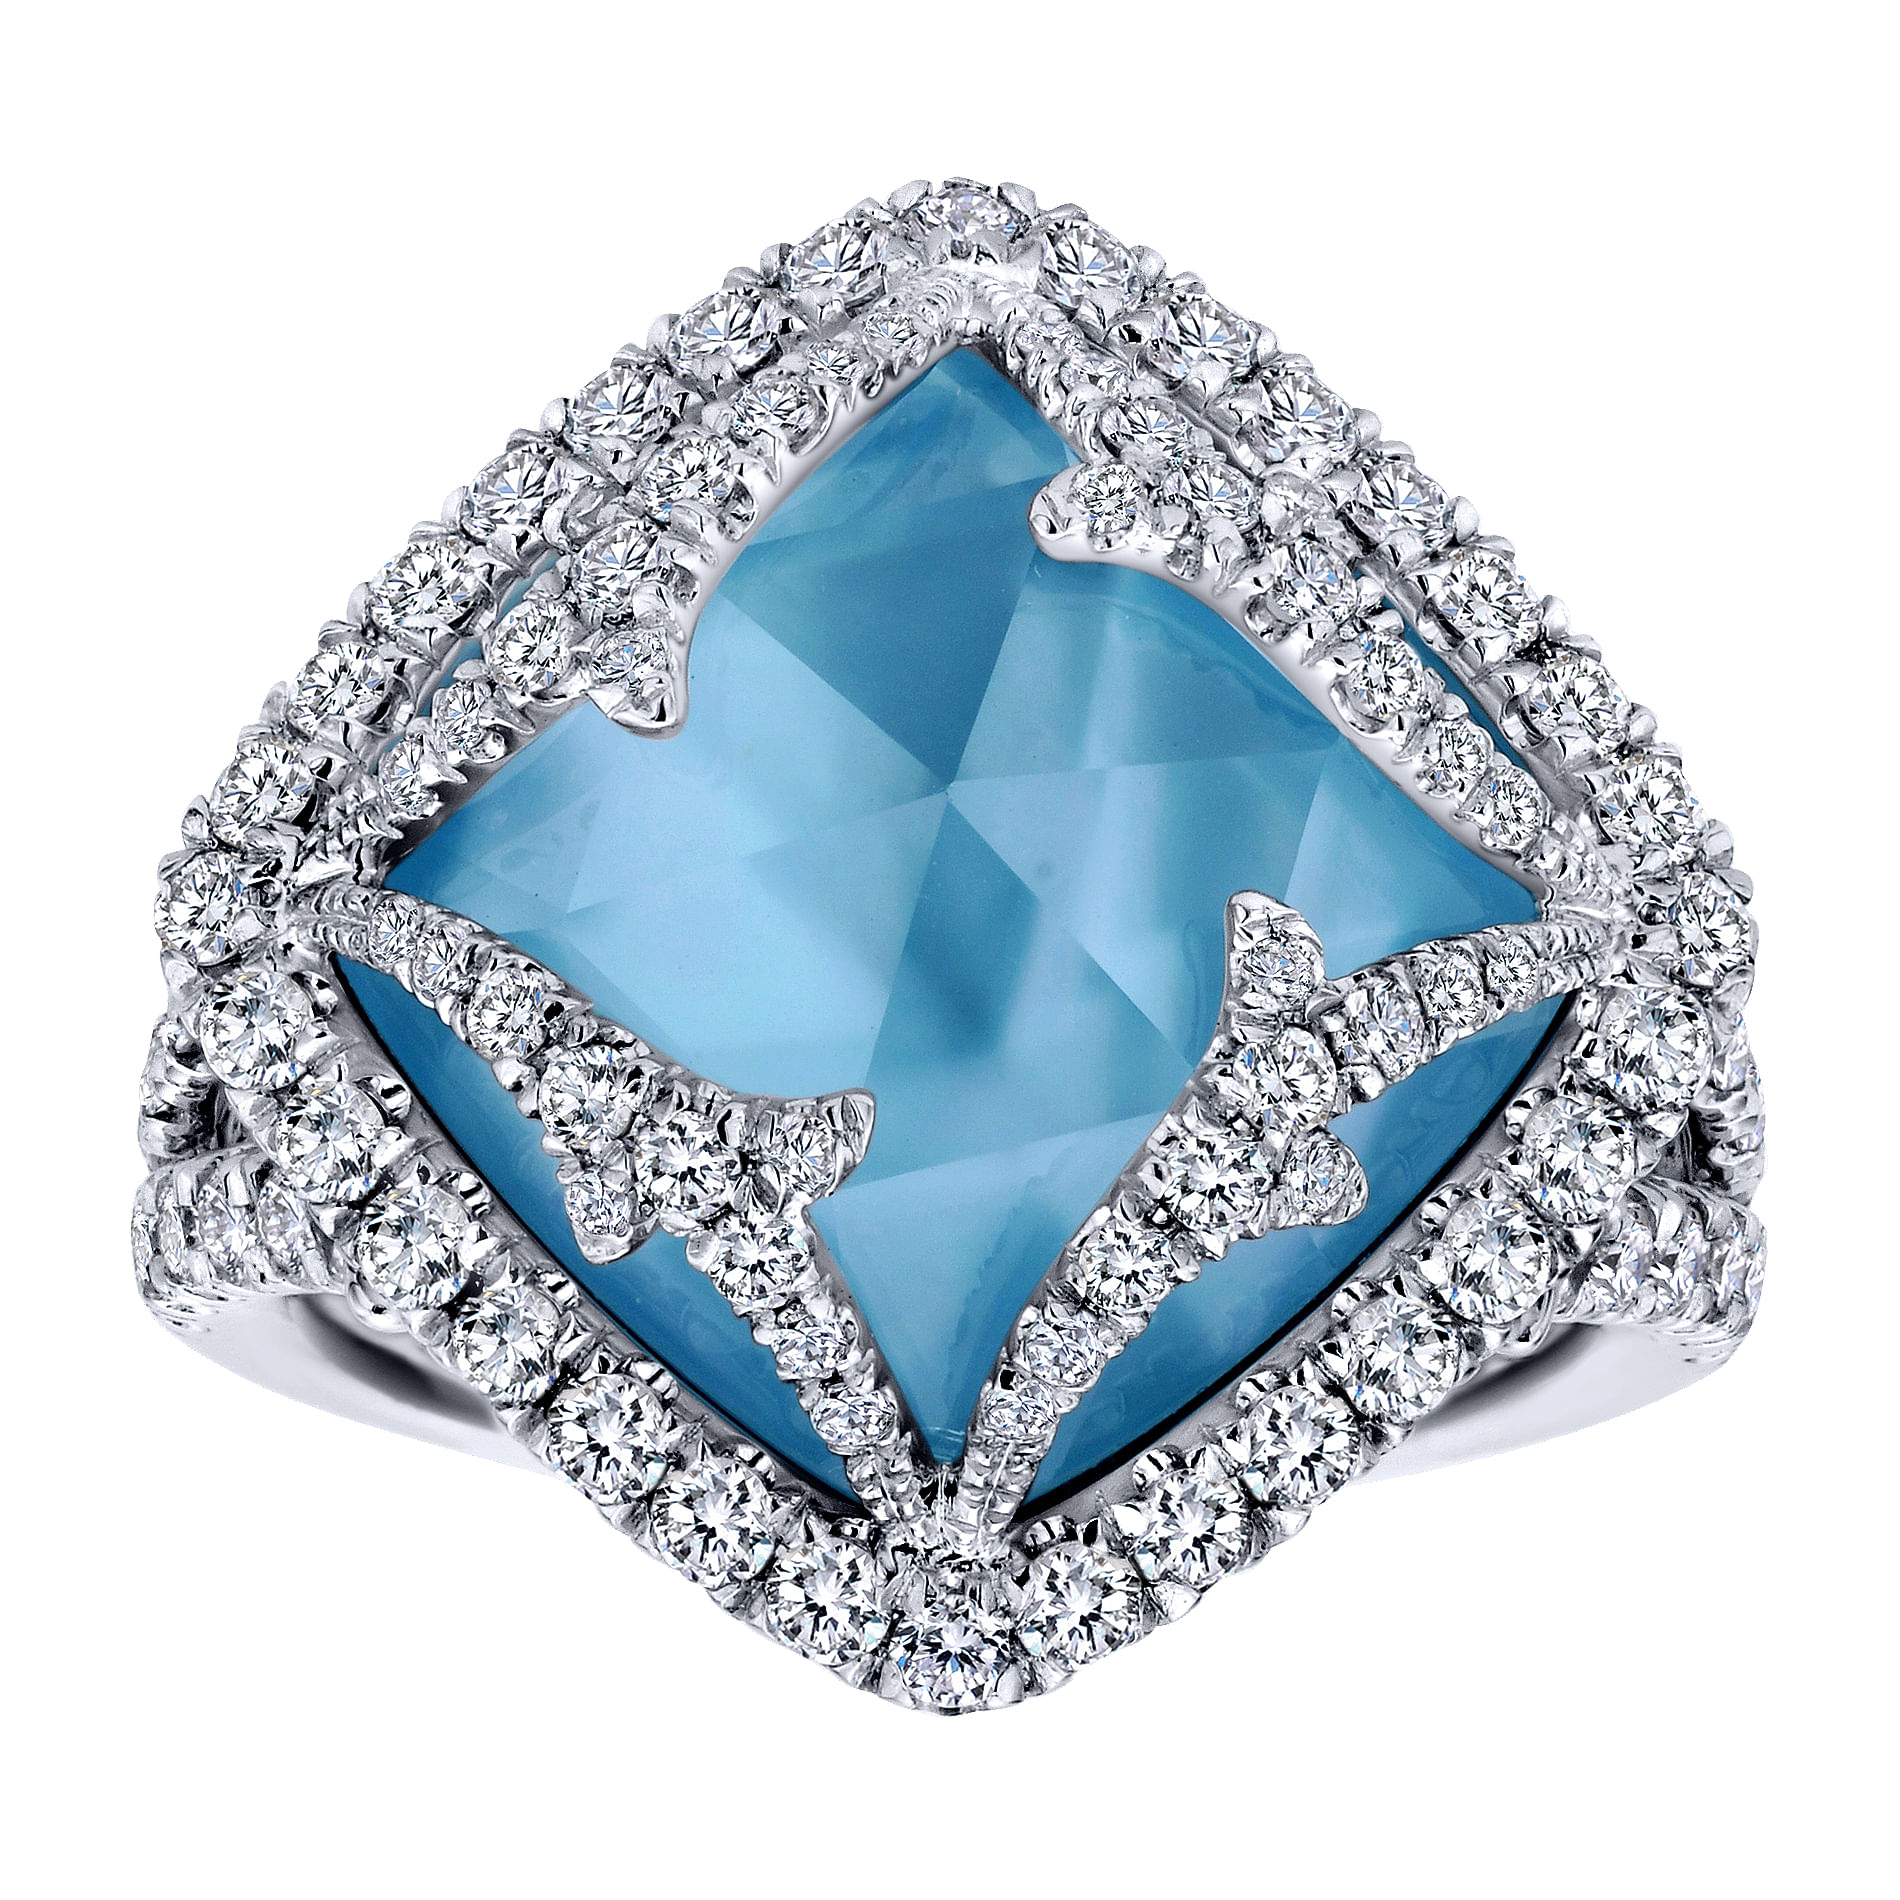 18K White Gold Vintage Inspired Rock Crystal, White MOP & Turquoise Triplet Ring